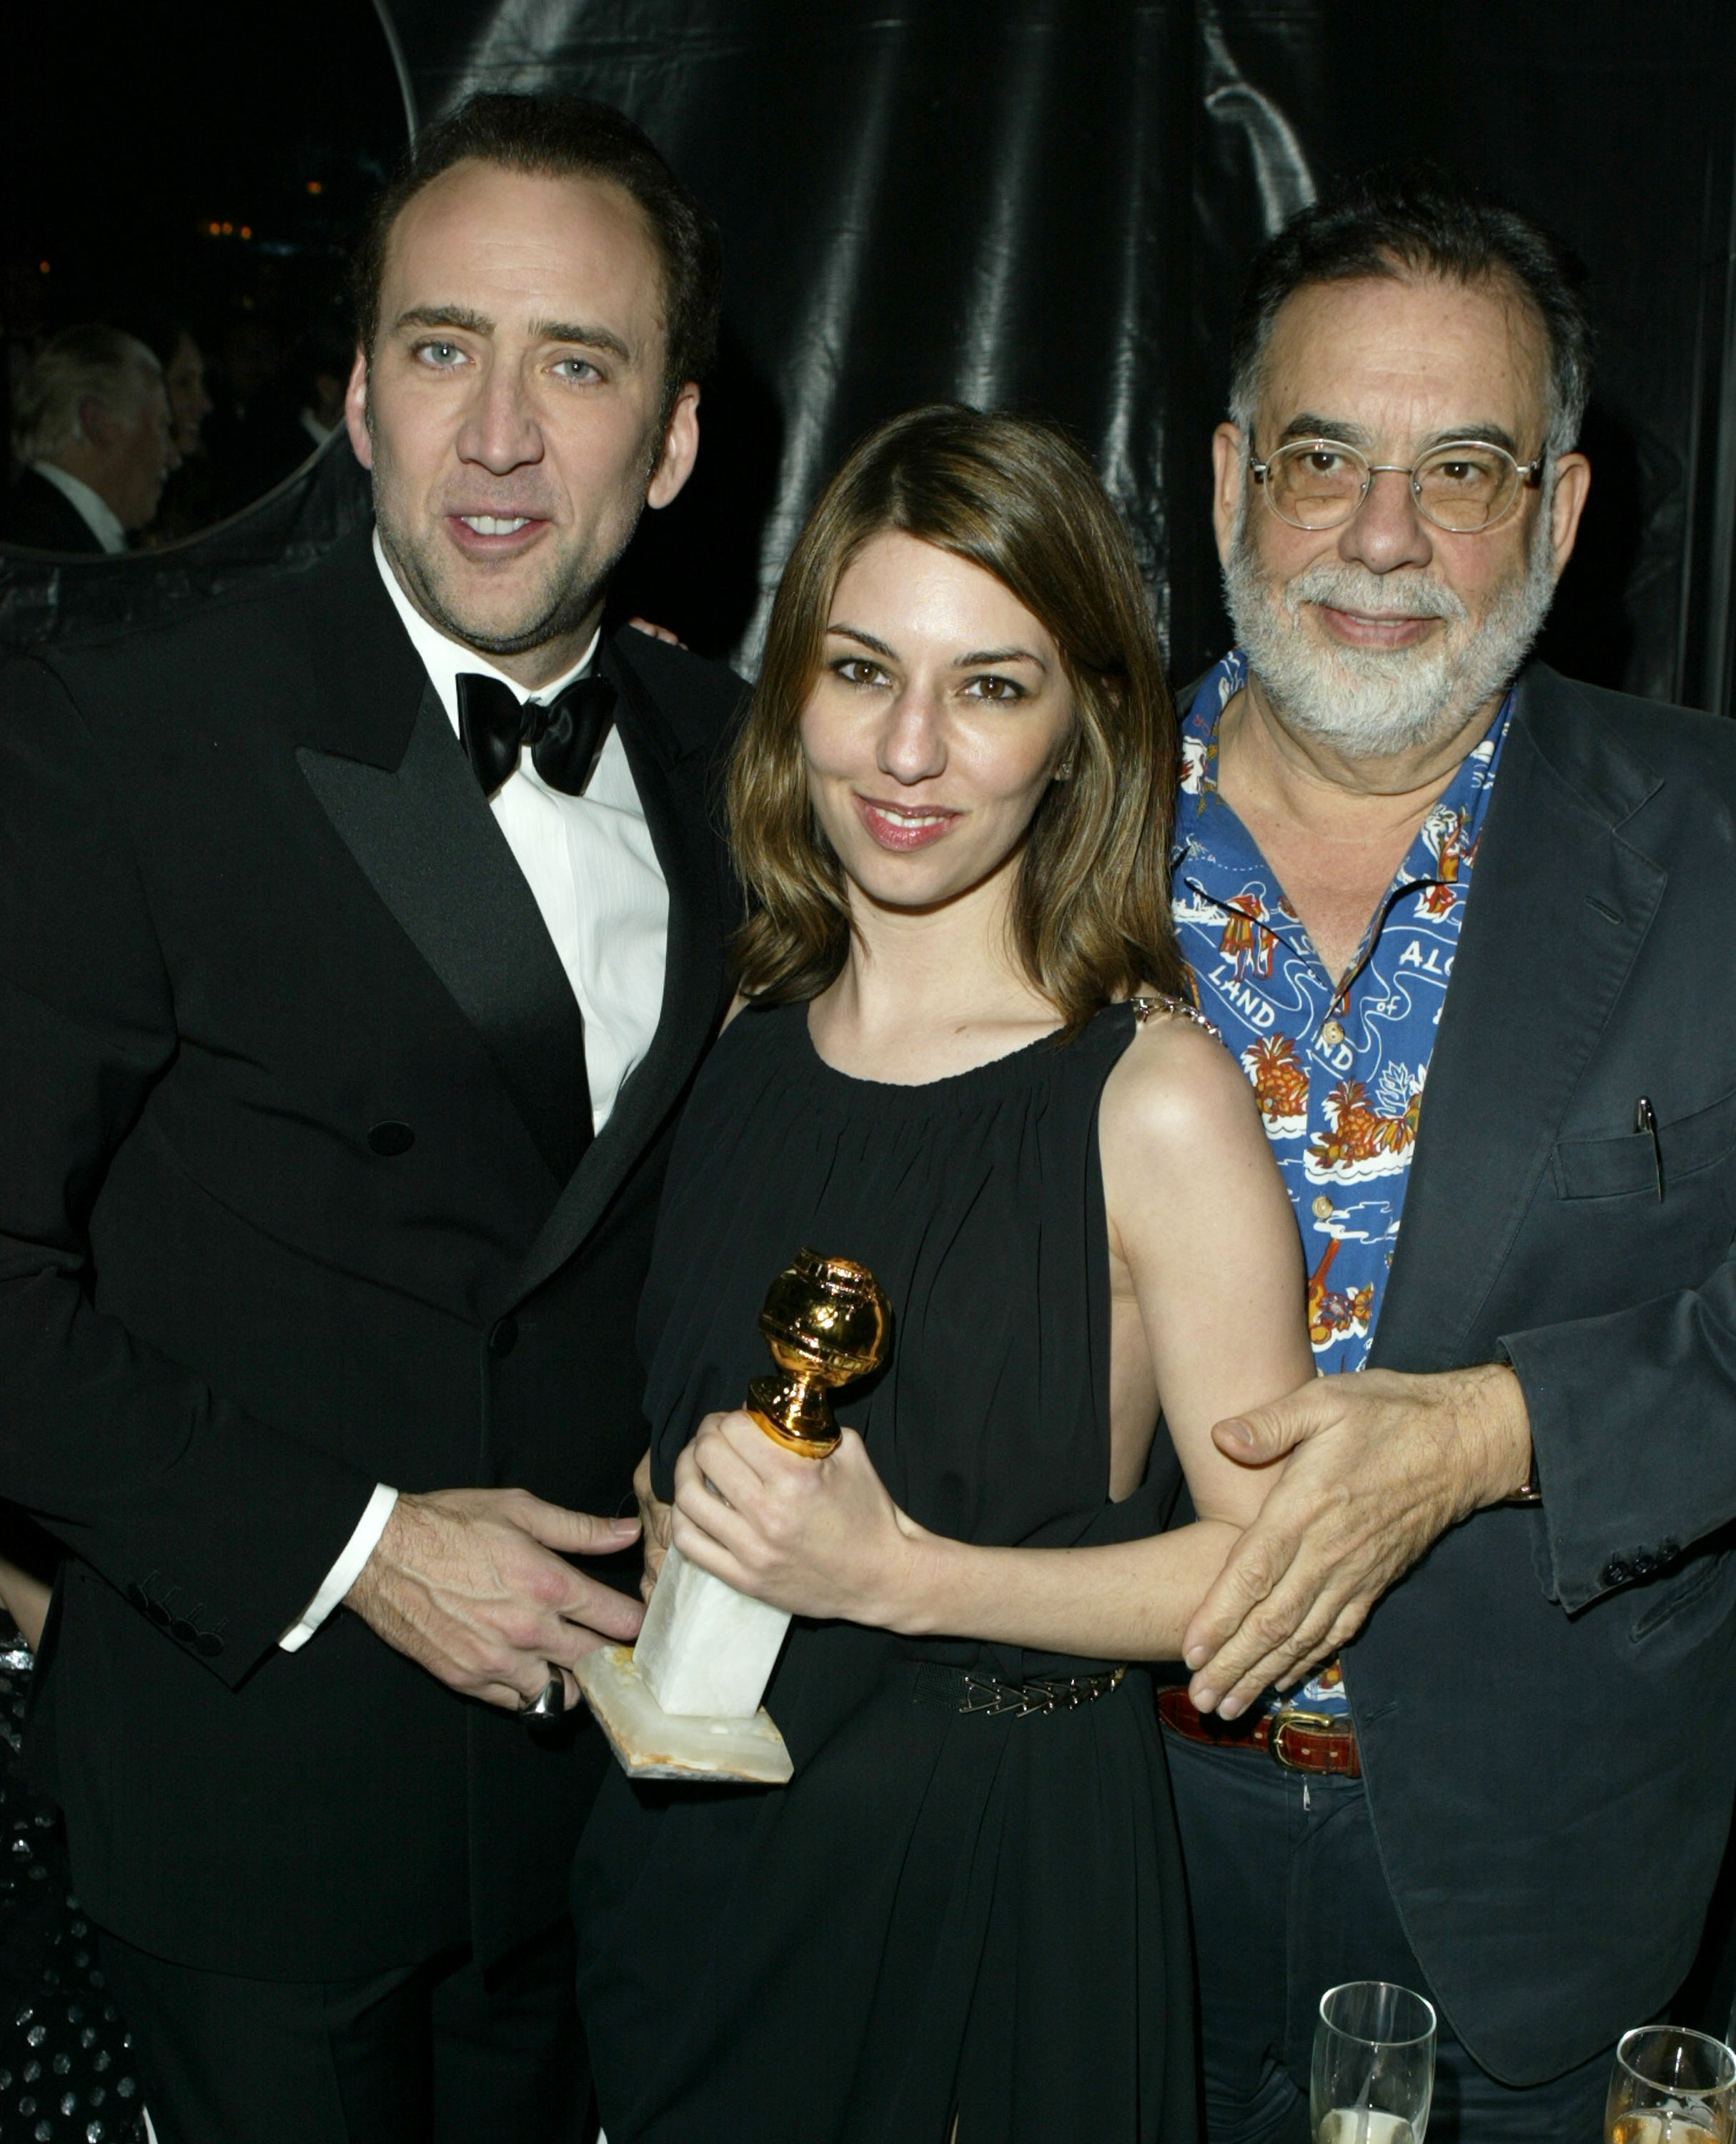 A photo of nicolas sofia and francis holding an award